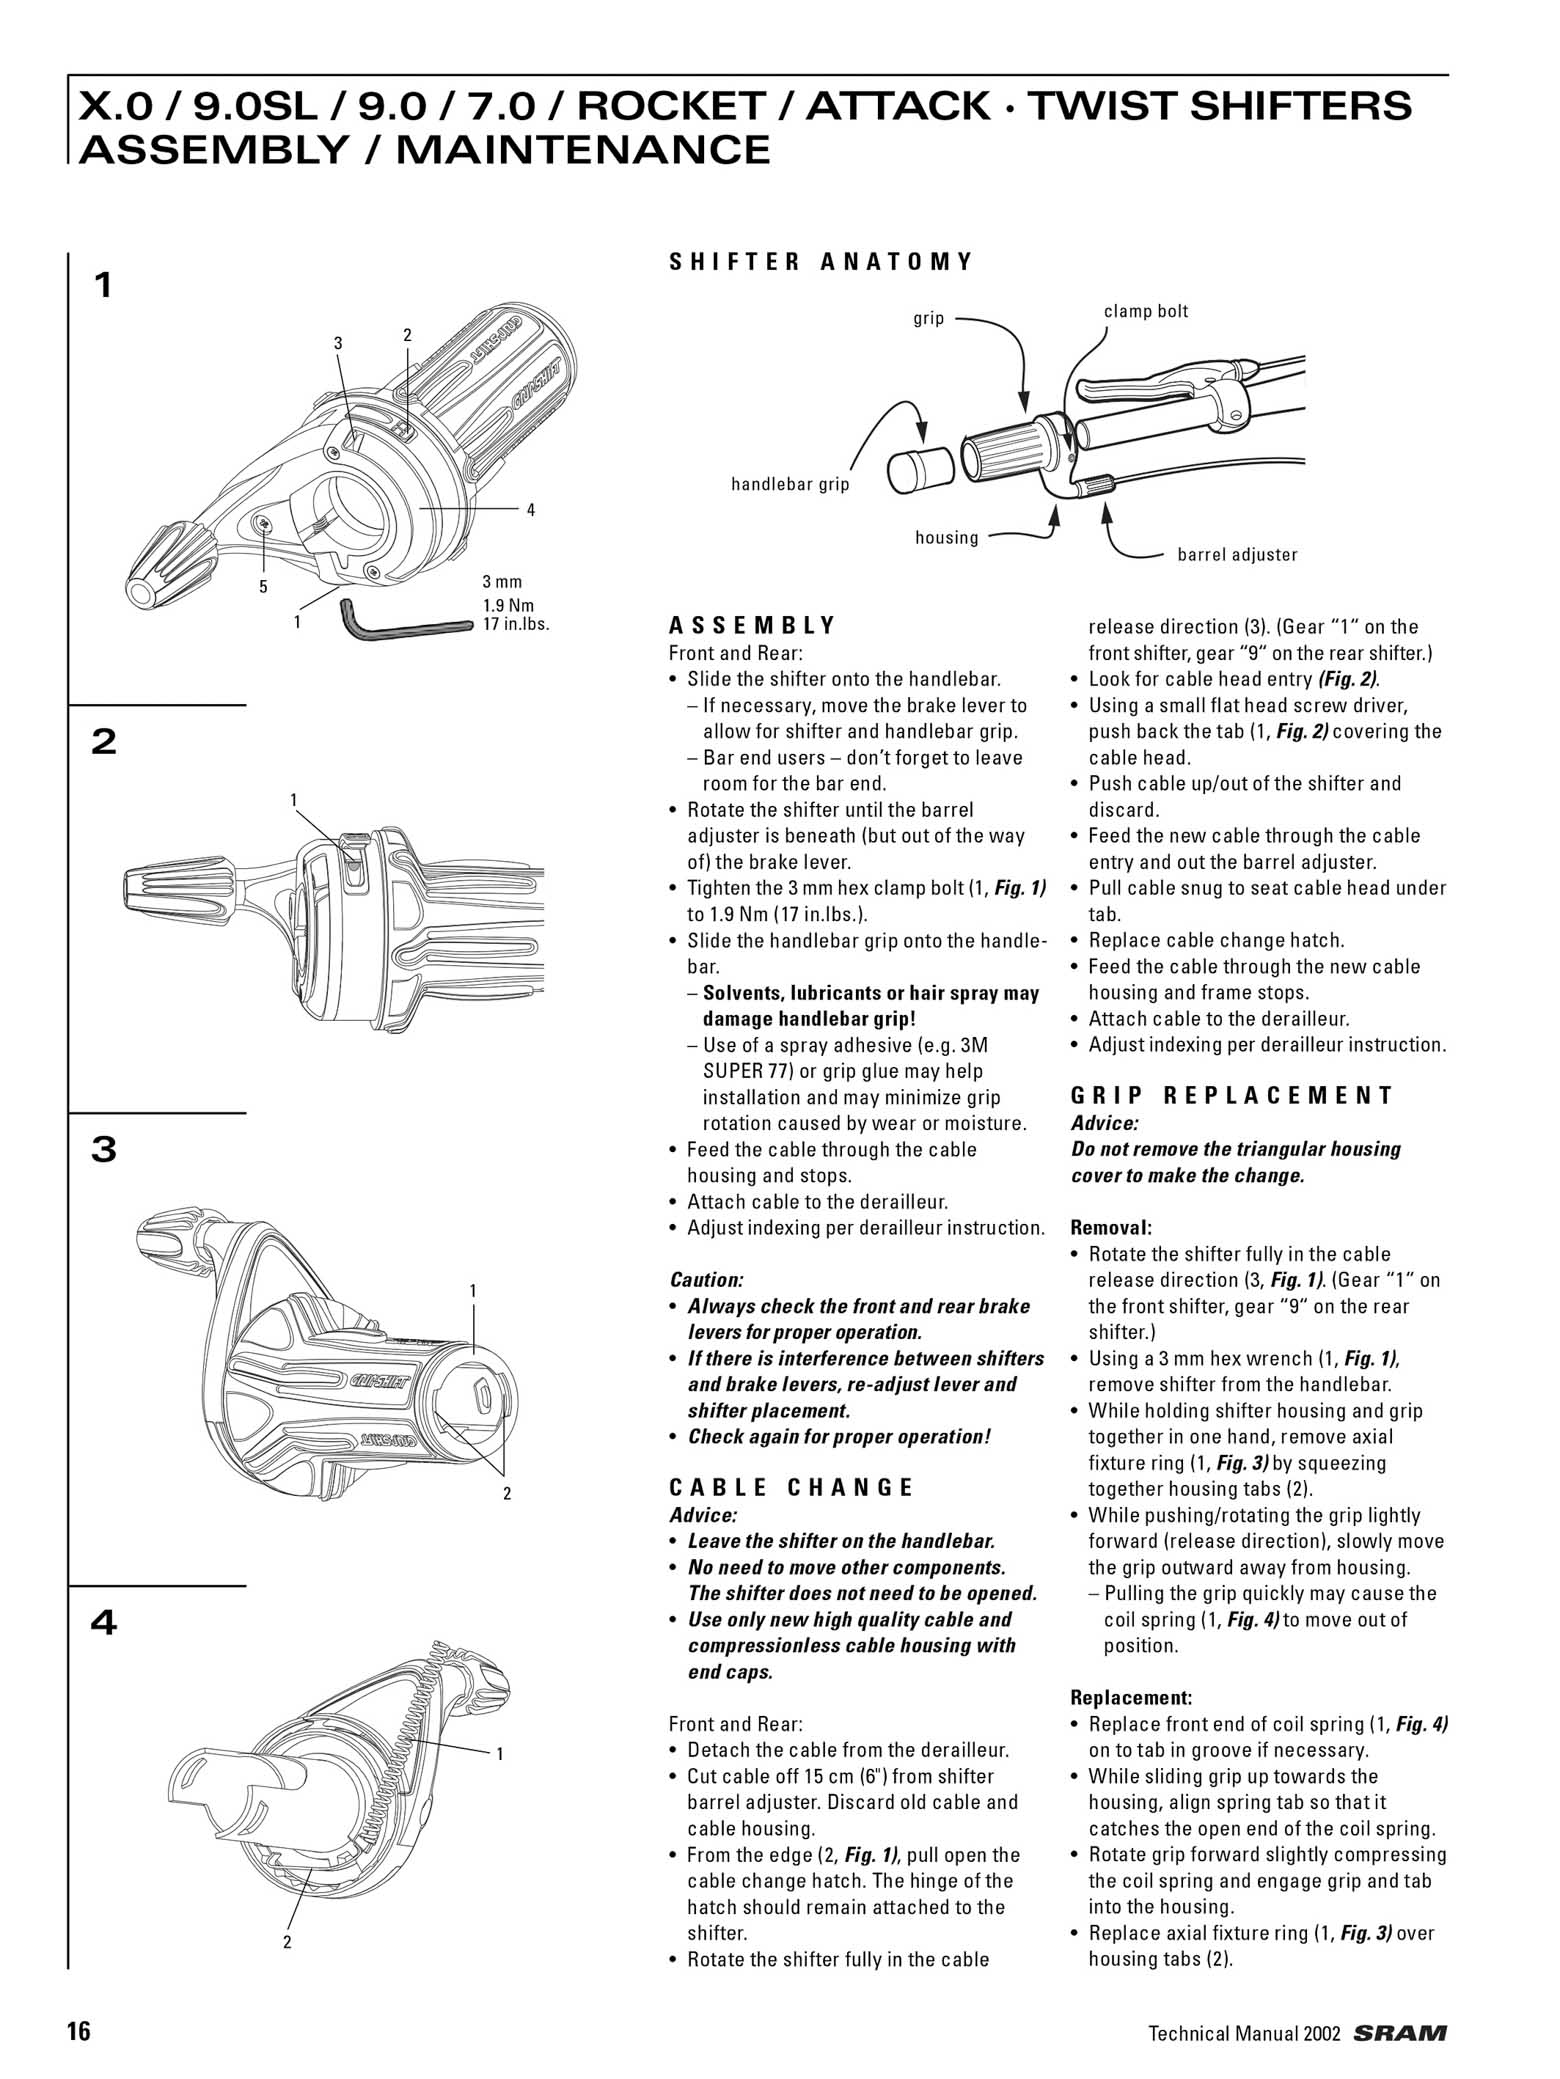 SRAM Technical Manual 2002 page 016 main image